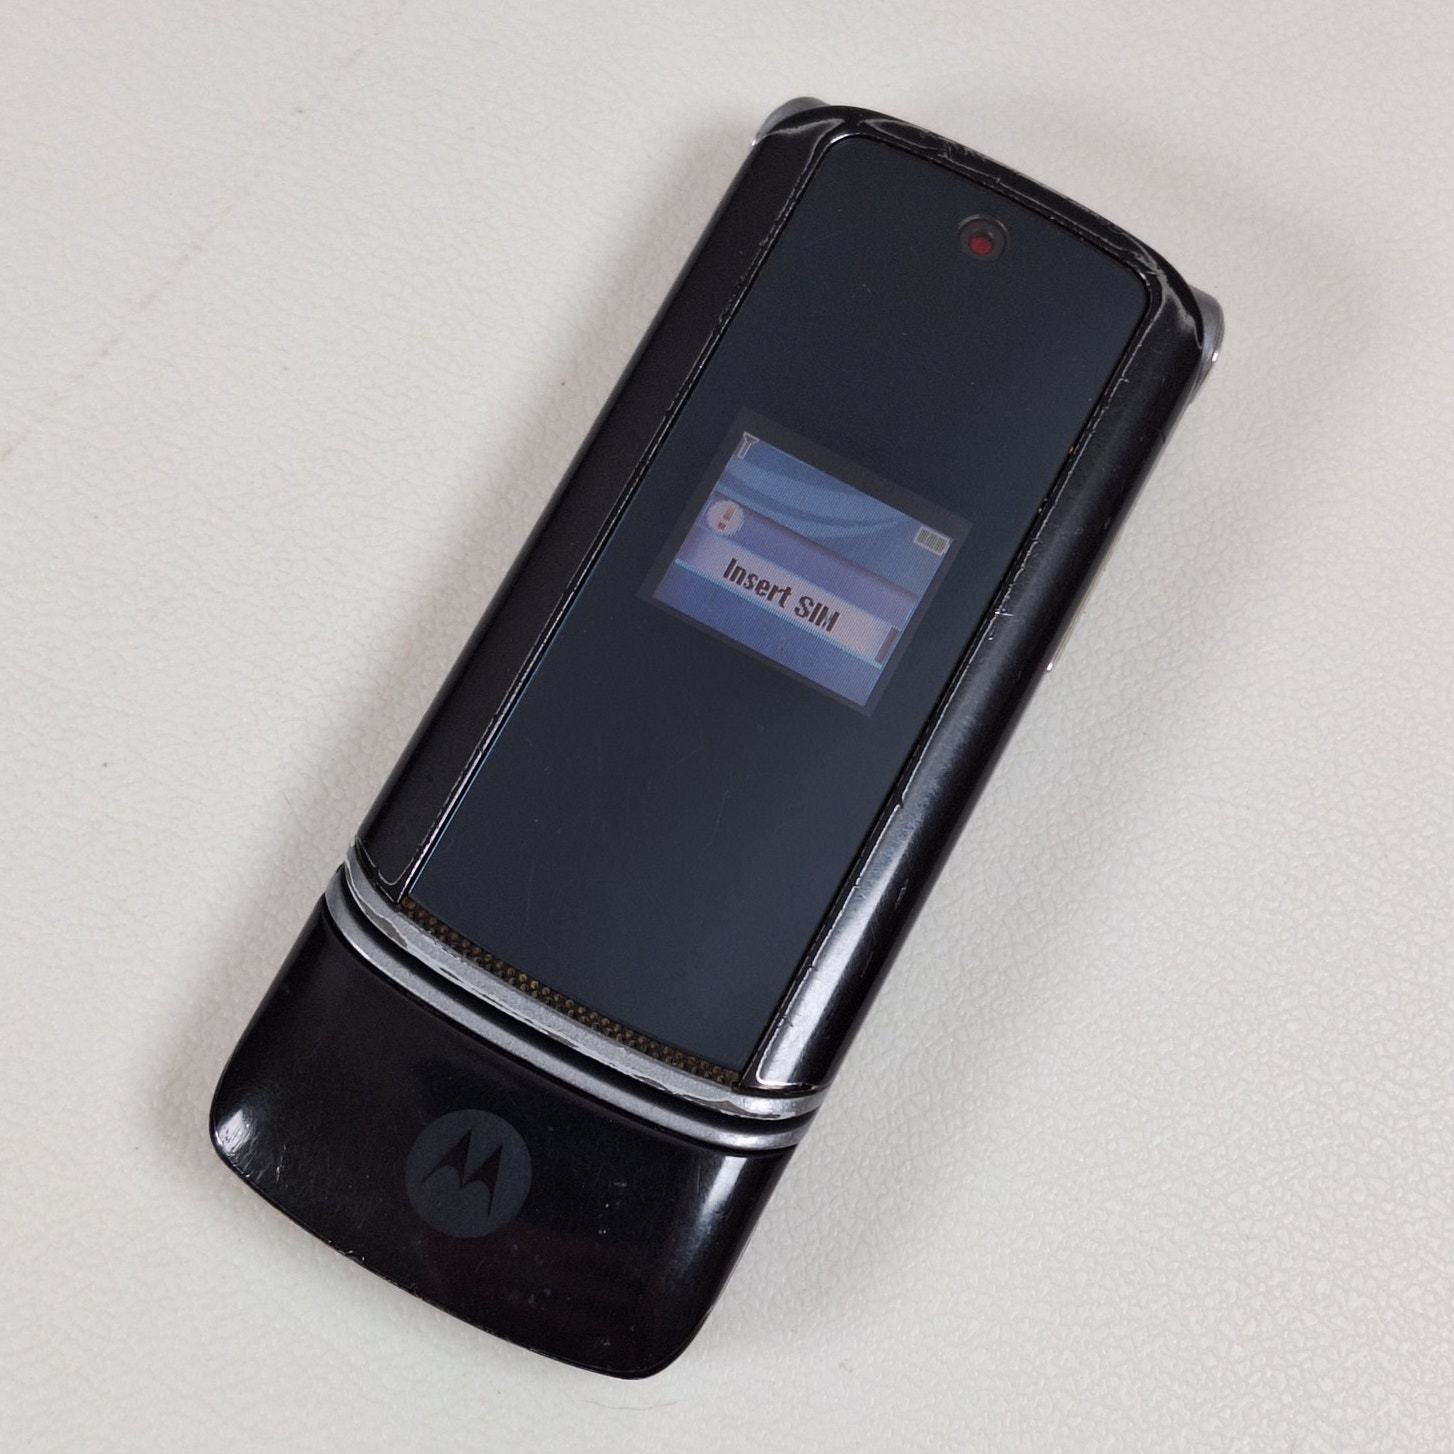 Primary image for Motorola KRZR K1 Black Flip Phone (AT&T)